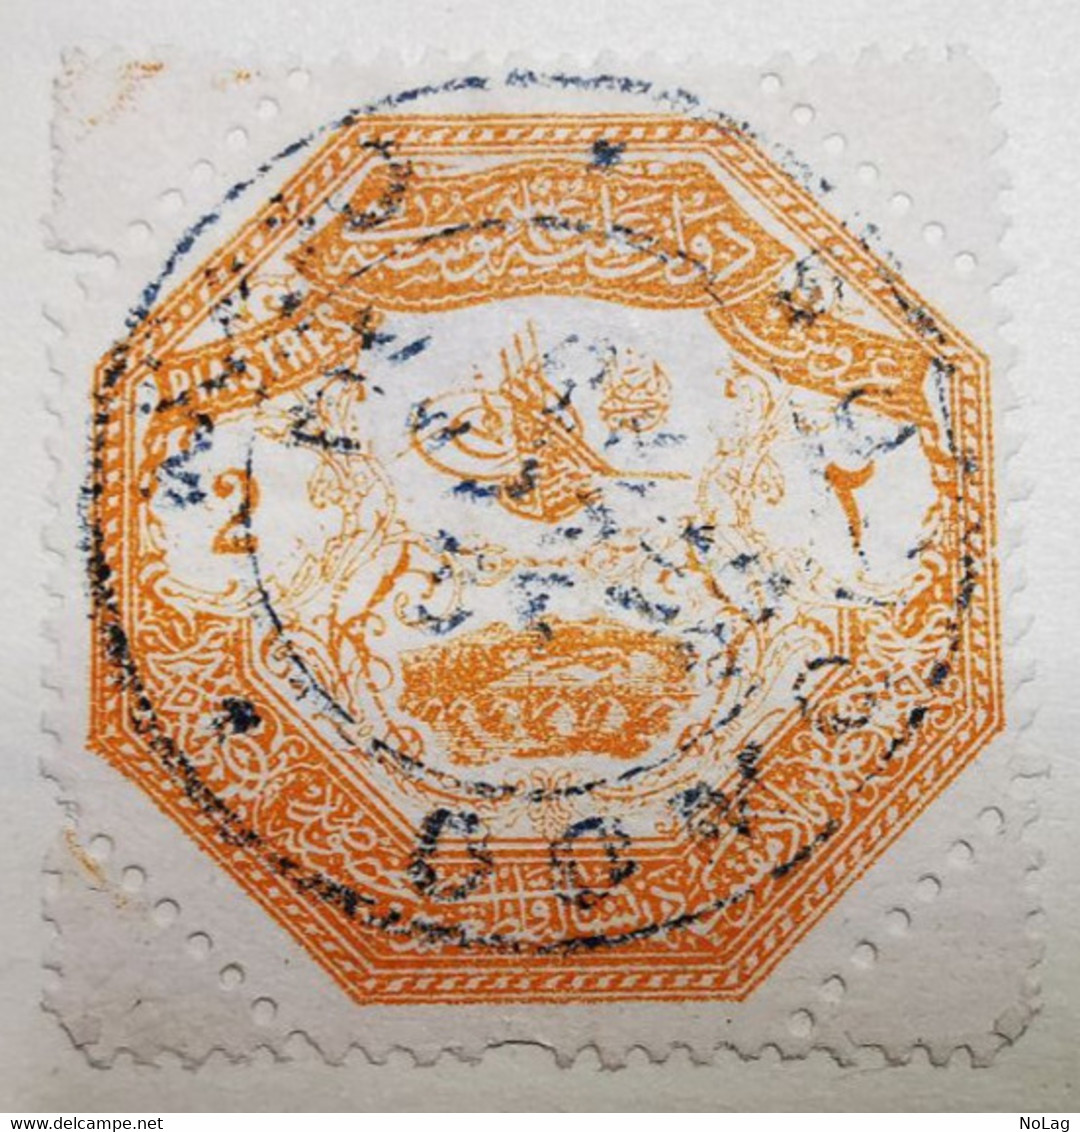 Grèce Thessalie 1898 Y&T N°1 Au N° 3 Neufs Et N°4 Et N°5 Oblitérés - Unused Stamps